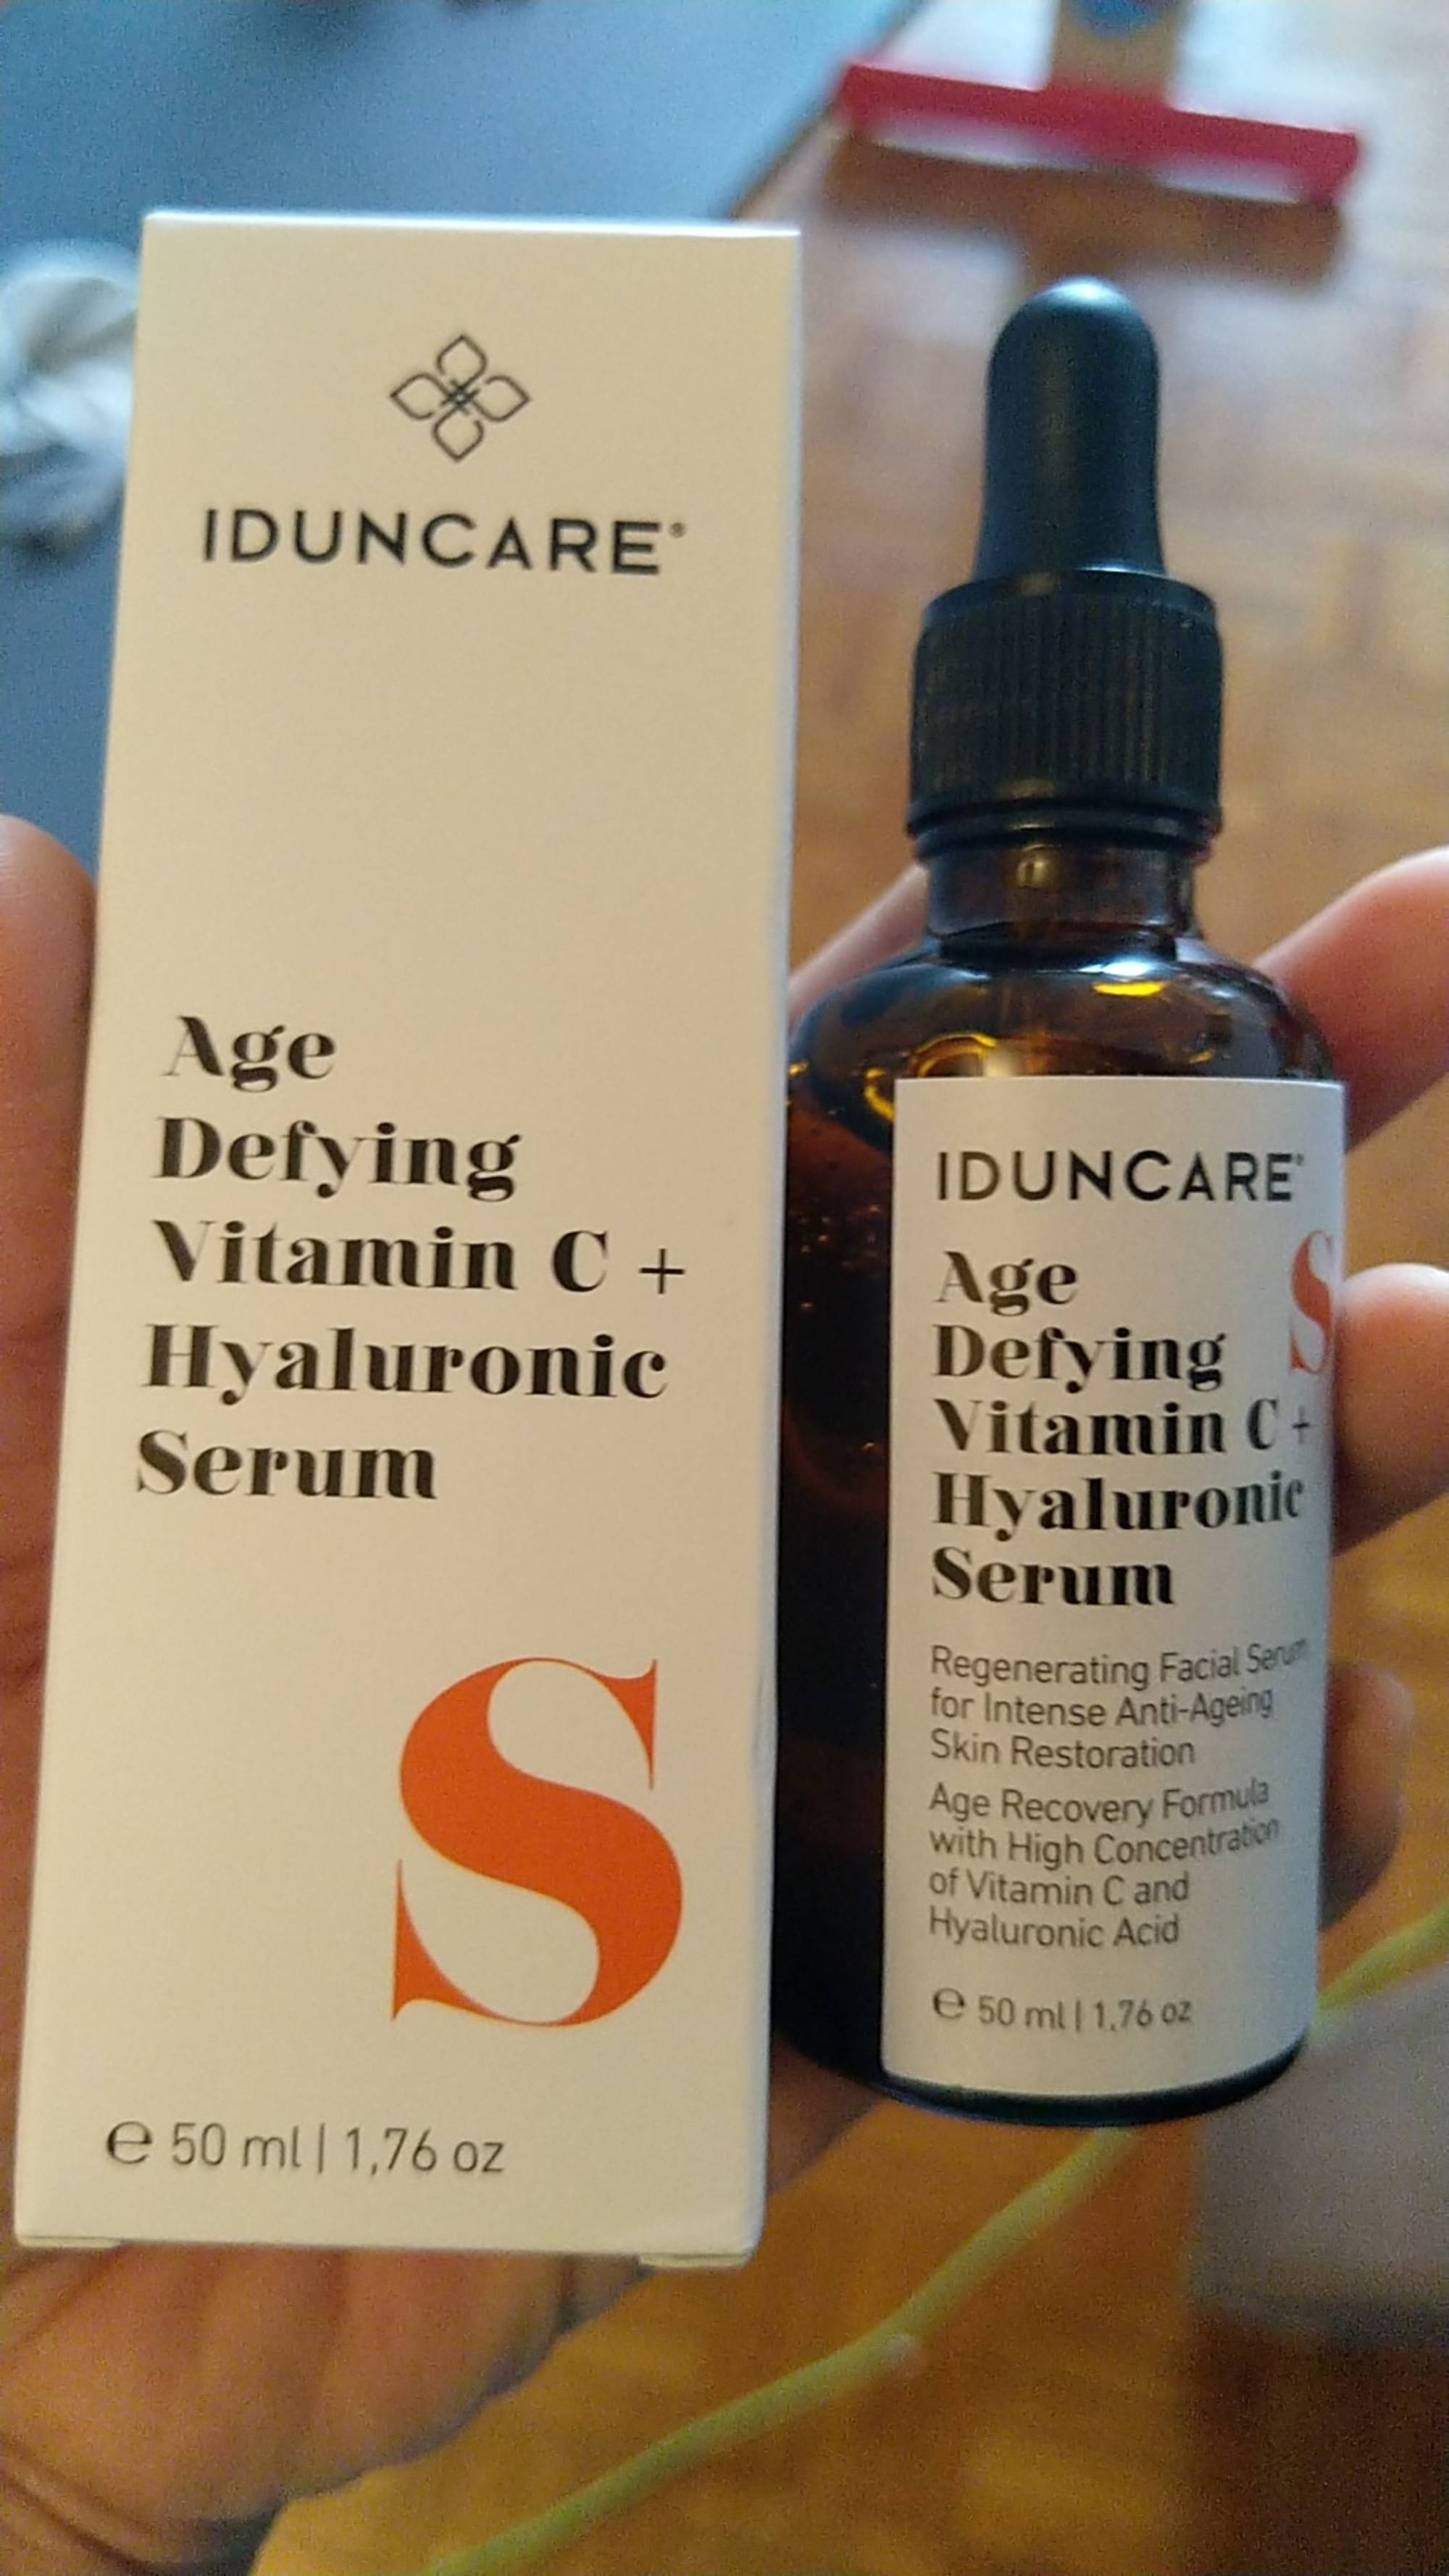 IDUNCARE - Age defying vitamin C + Hyaluronic serum